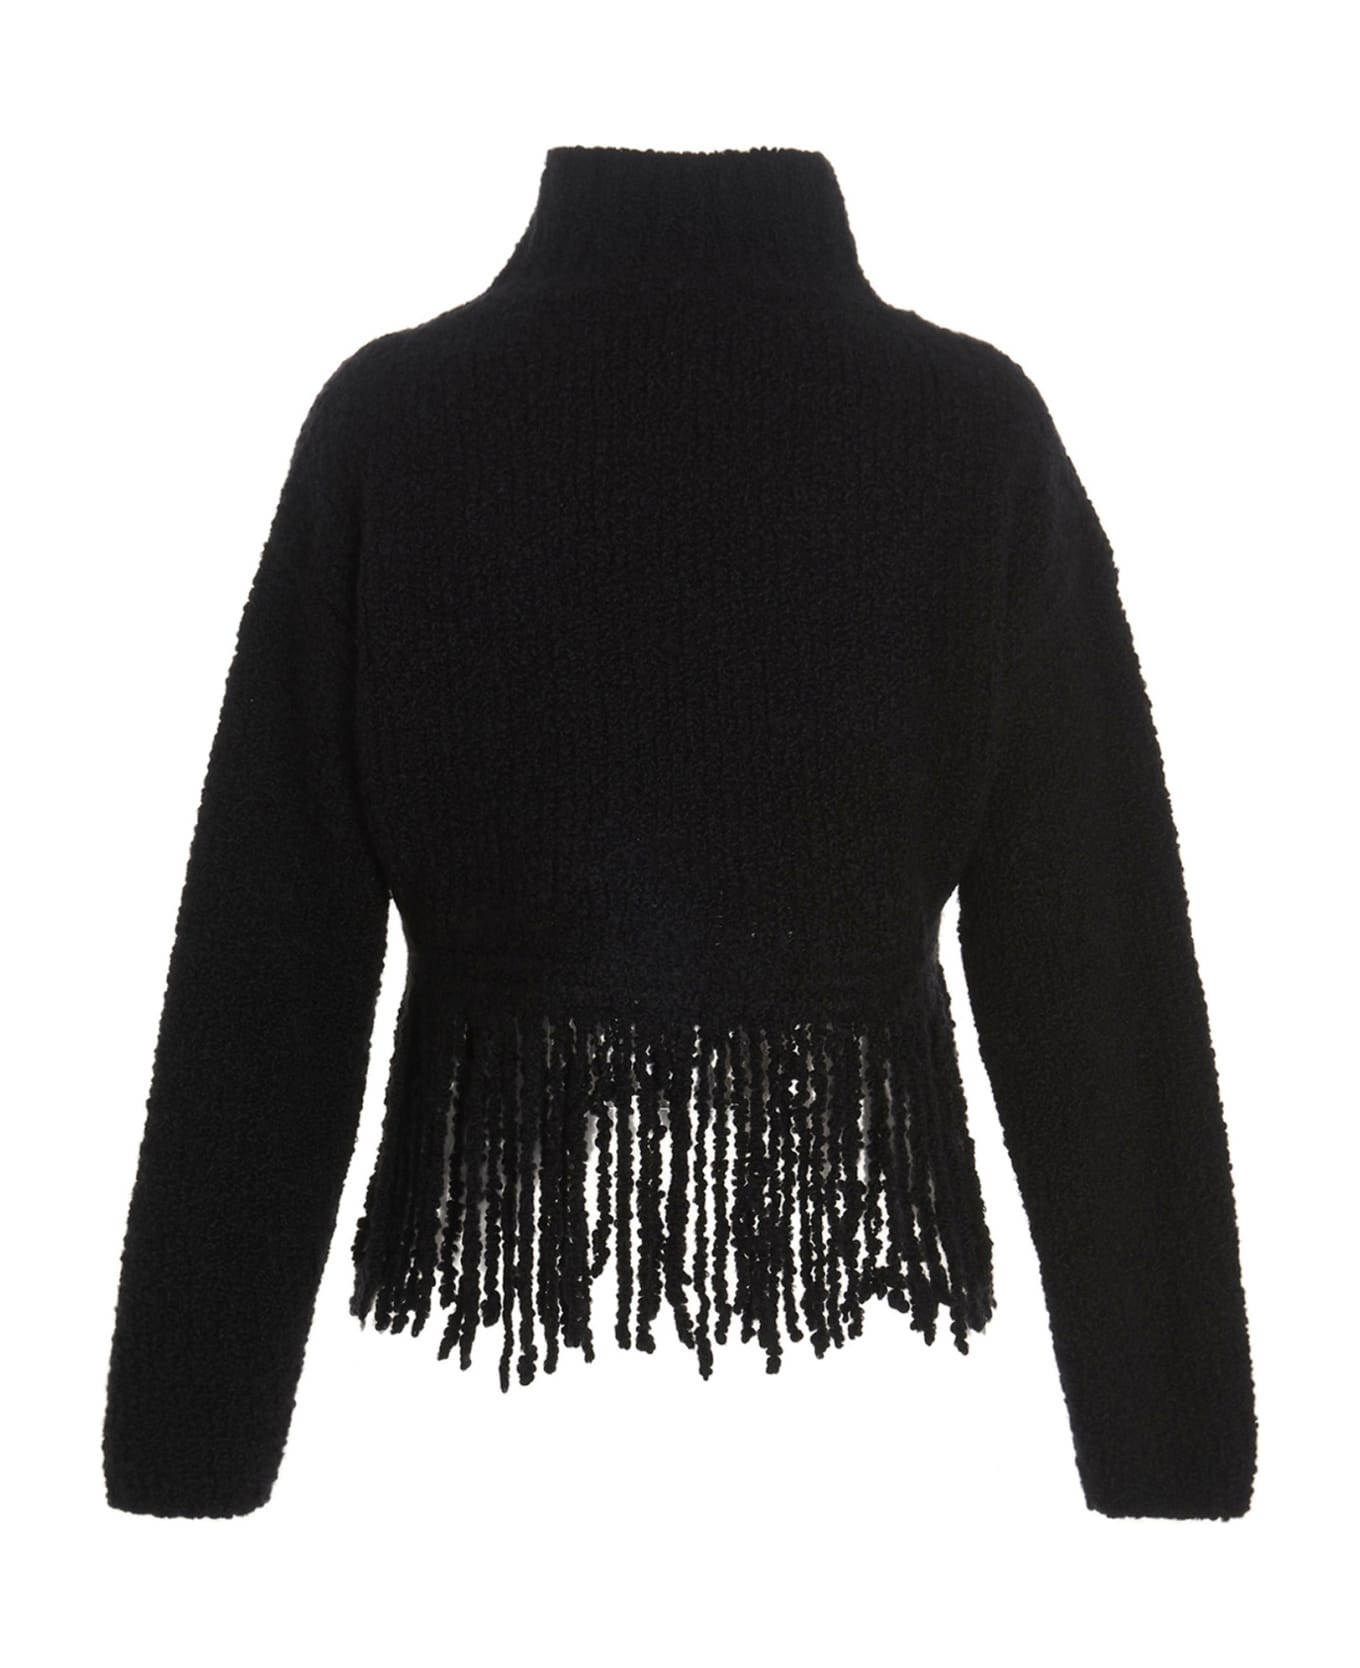 Mixik 'ray' Sweater - Black  